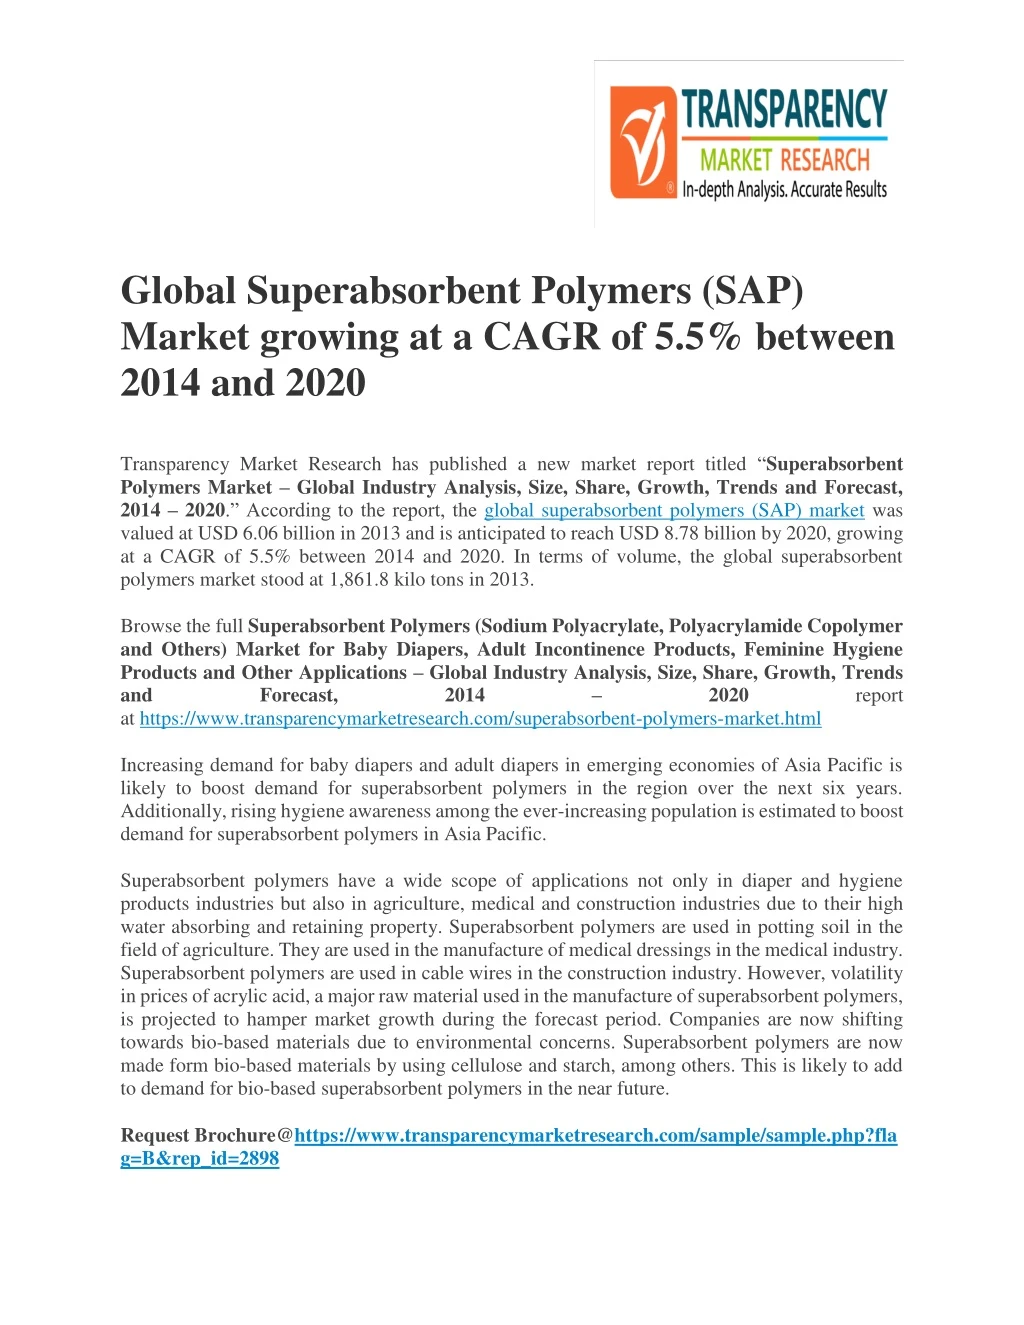 global superabsorbent polymers sap market growing